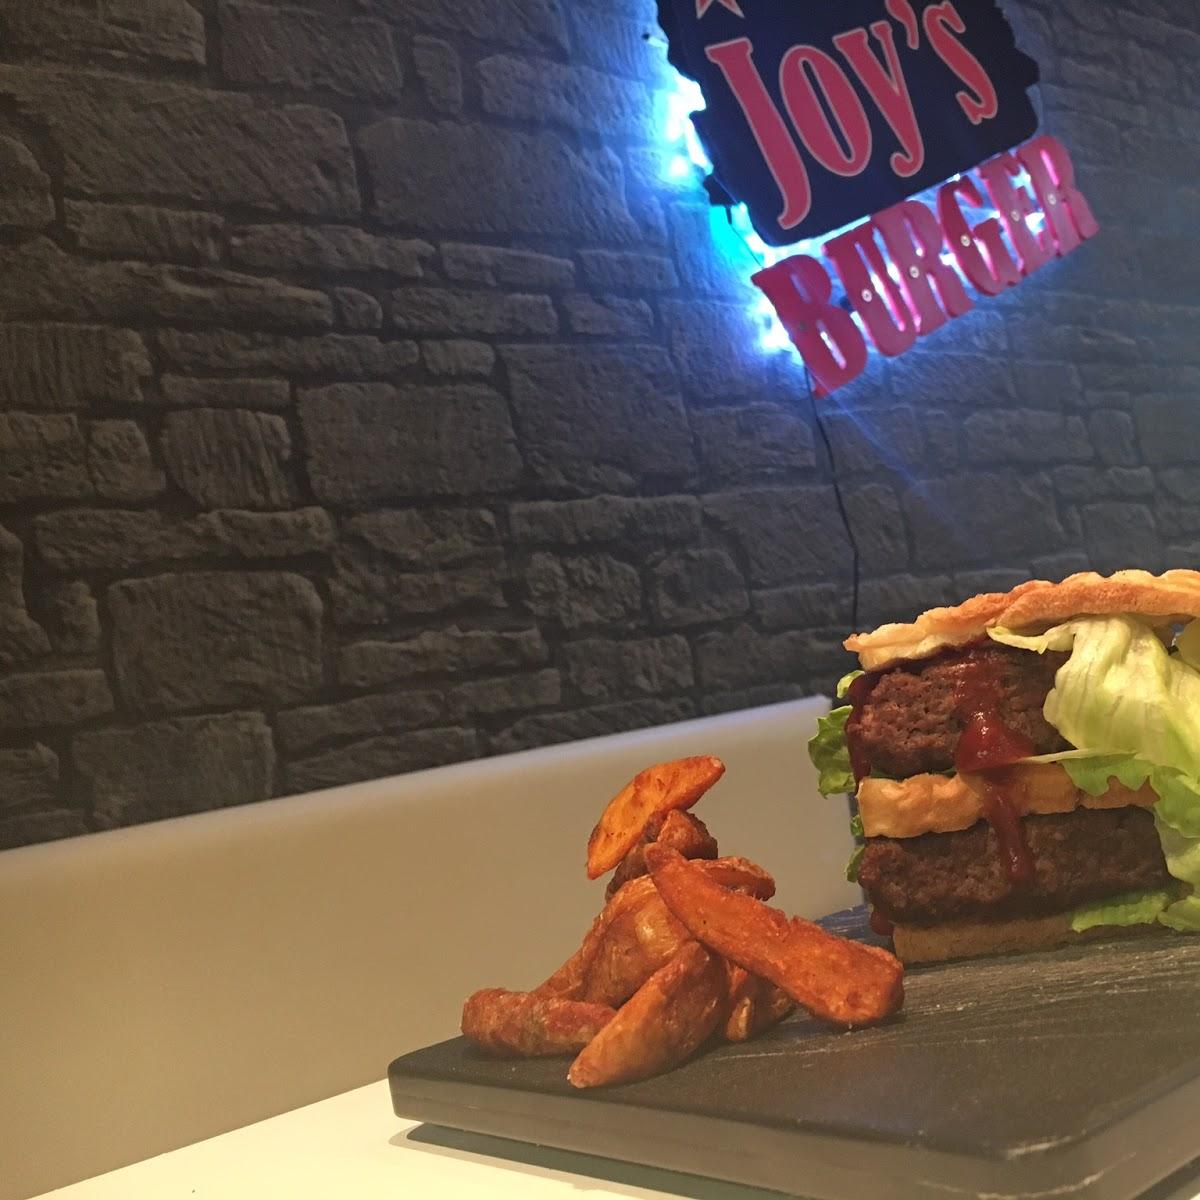 Restaurant "Joy’s Burger" in Wuppertal